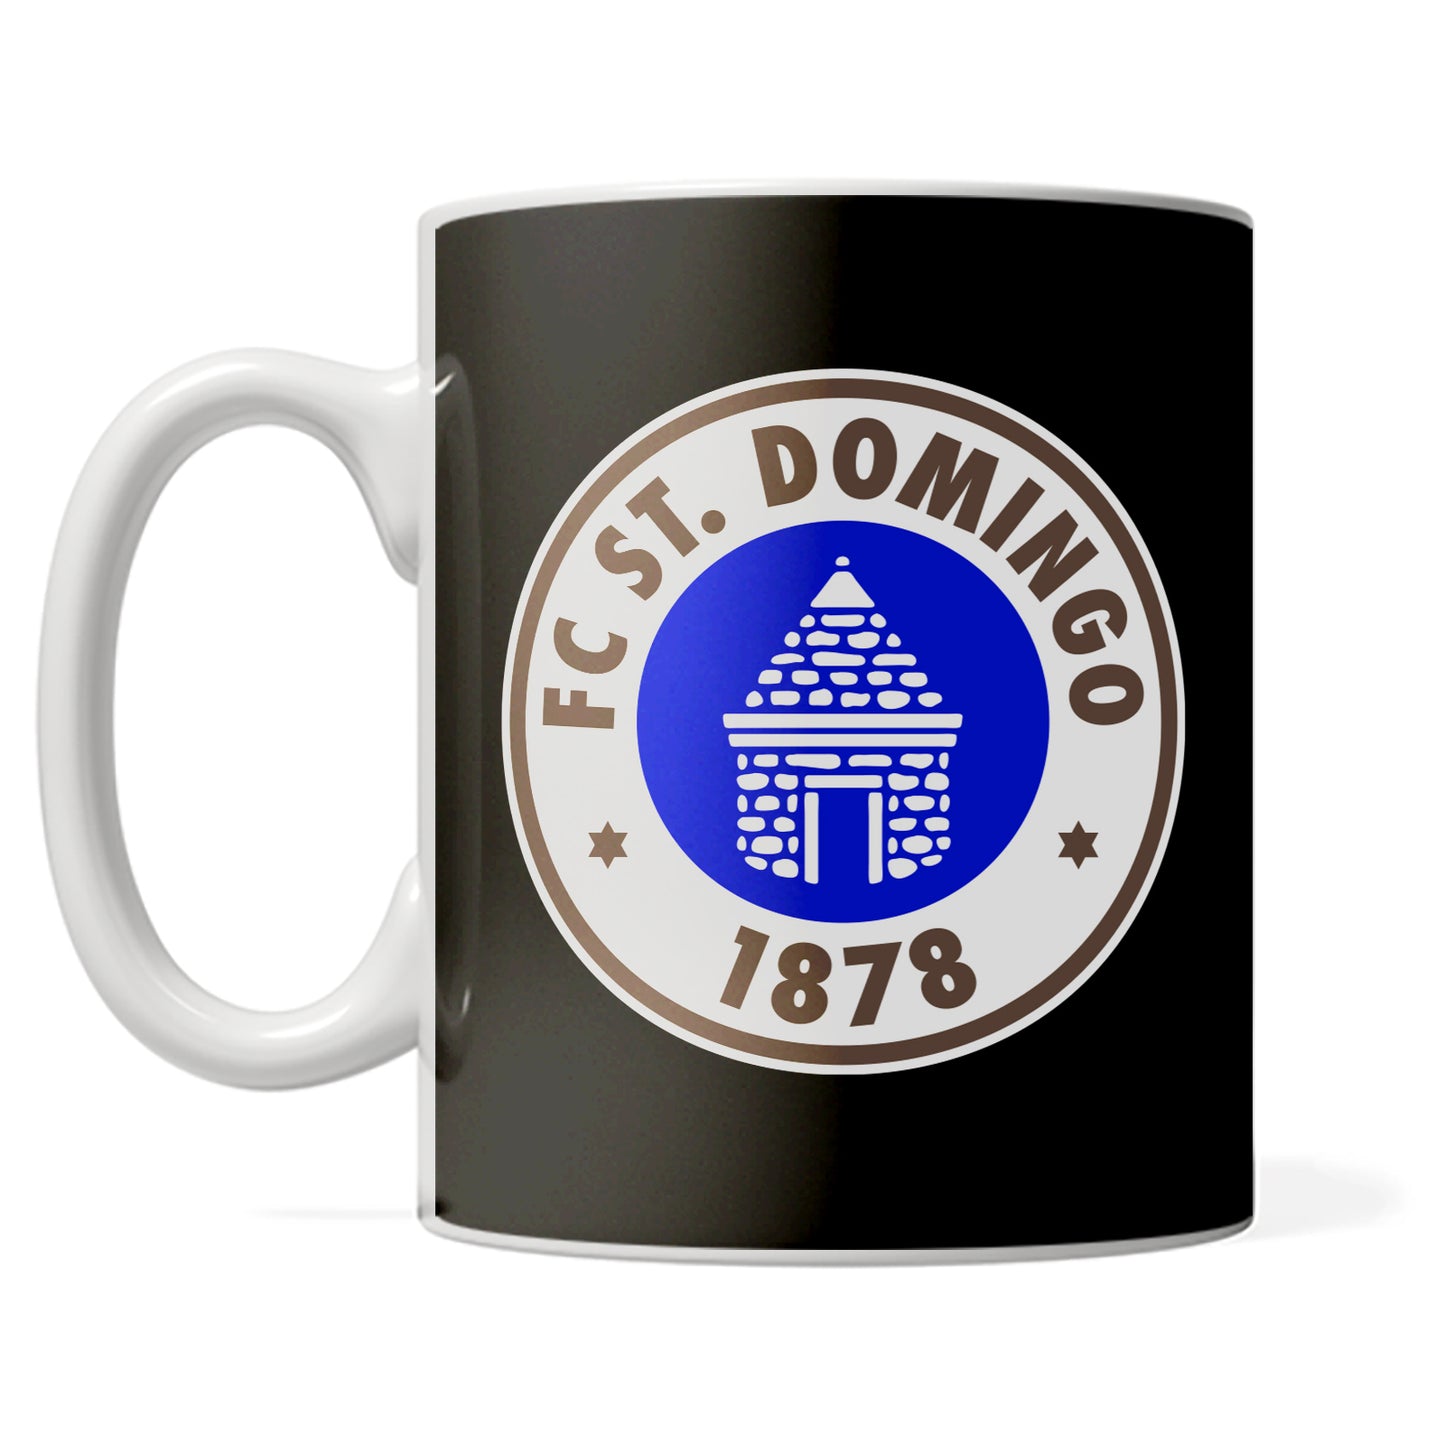 FC St. Domingo 'Reeperbahn' Mug